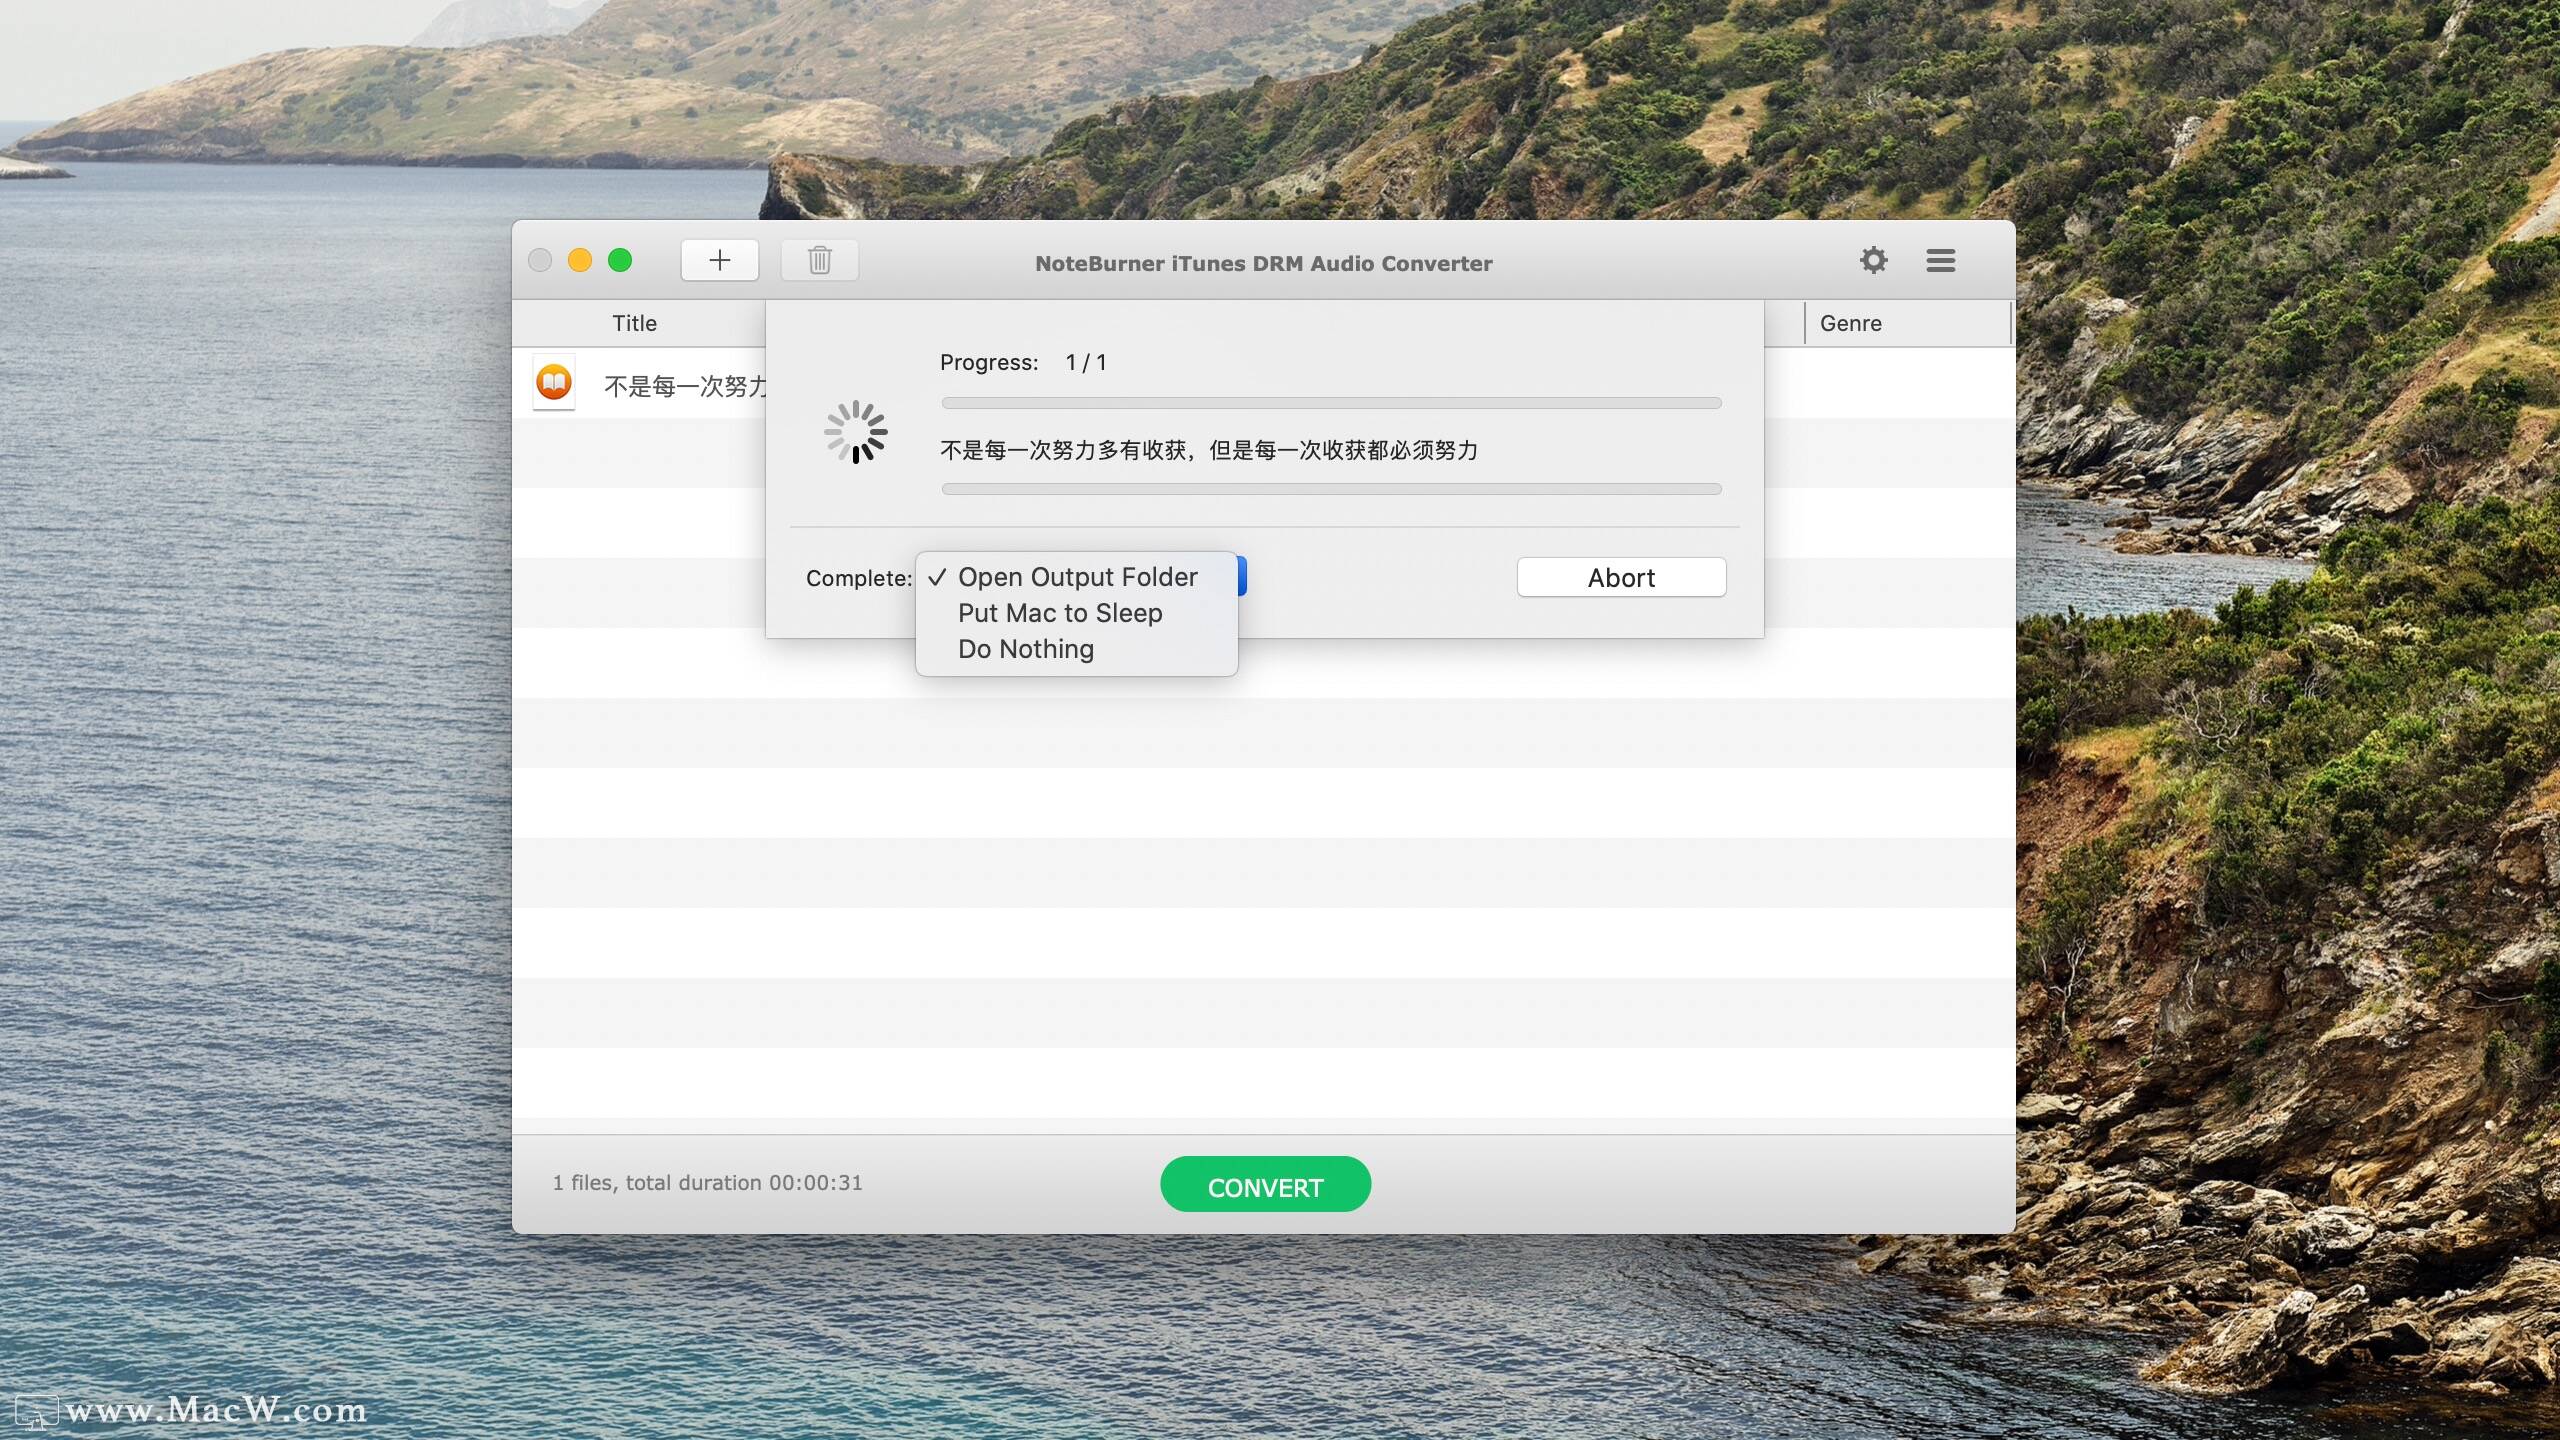 Mac 苹果DRM音频转换器 NoteBurner iTunes DRM Audio Converter 3.4.0 - 图3